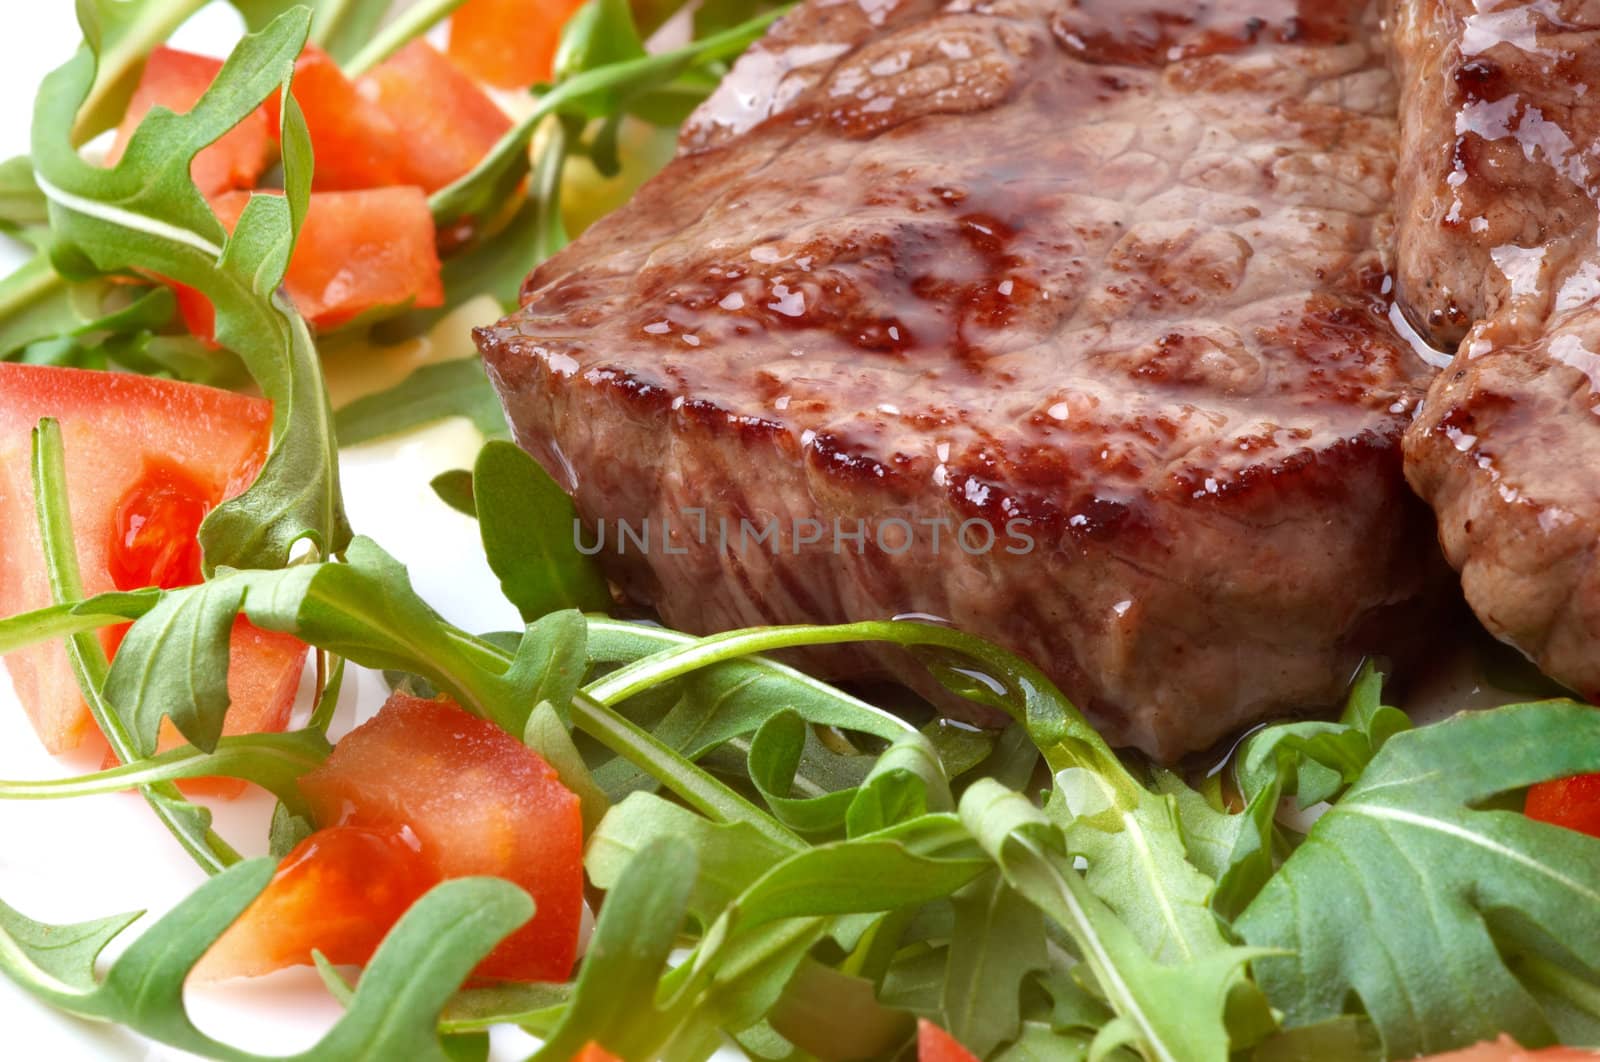 beef steak with rocket salad by starush